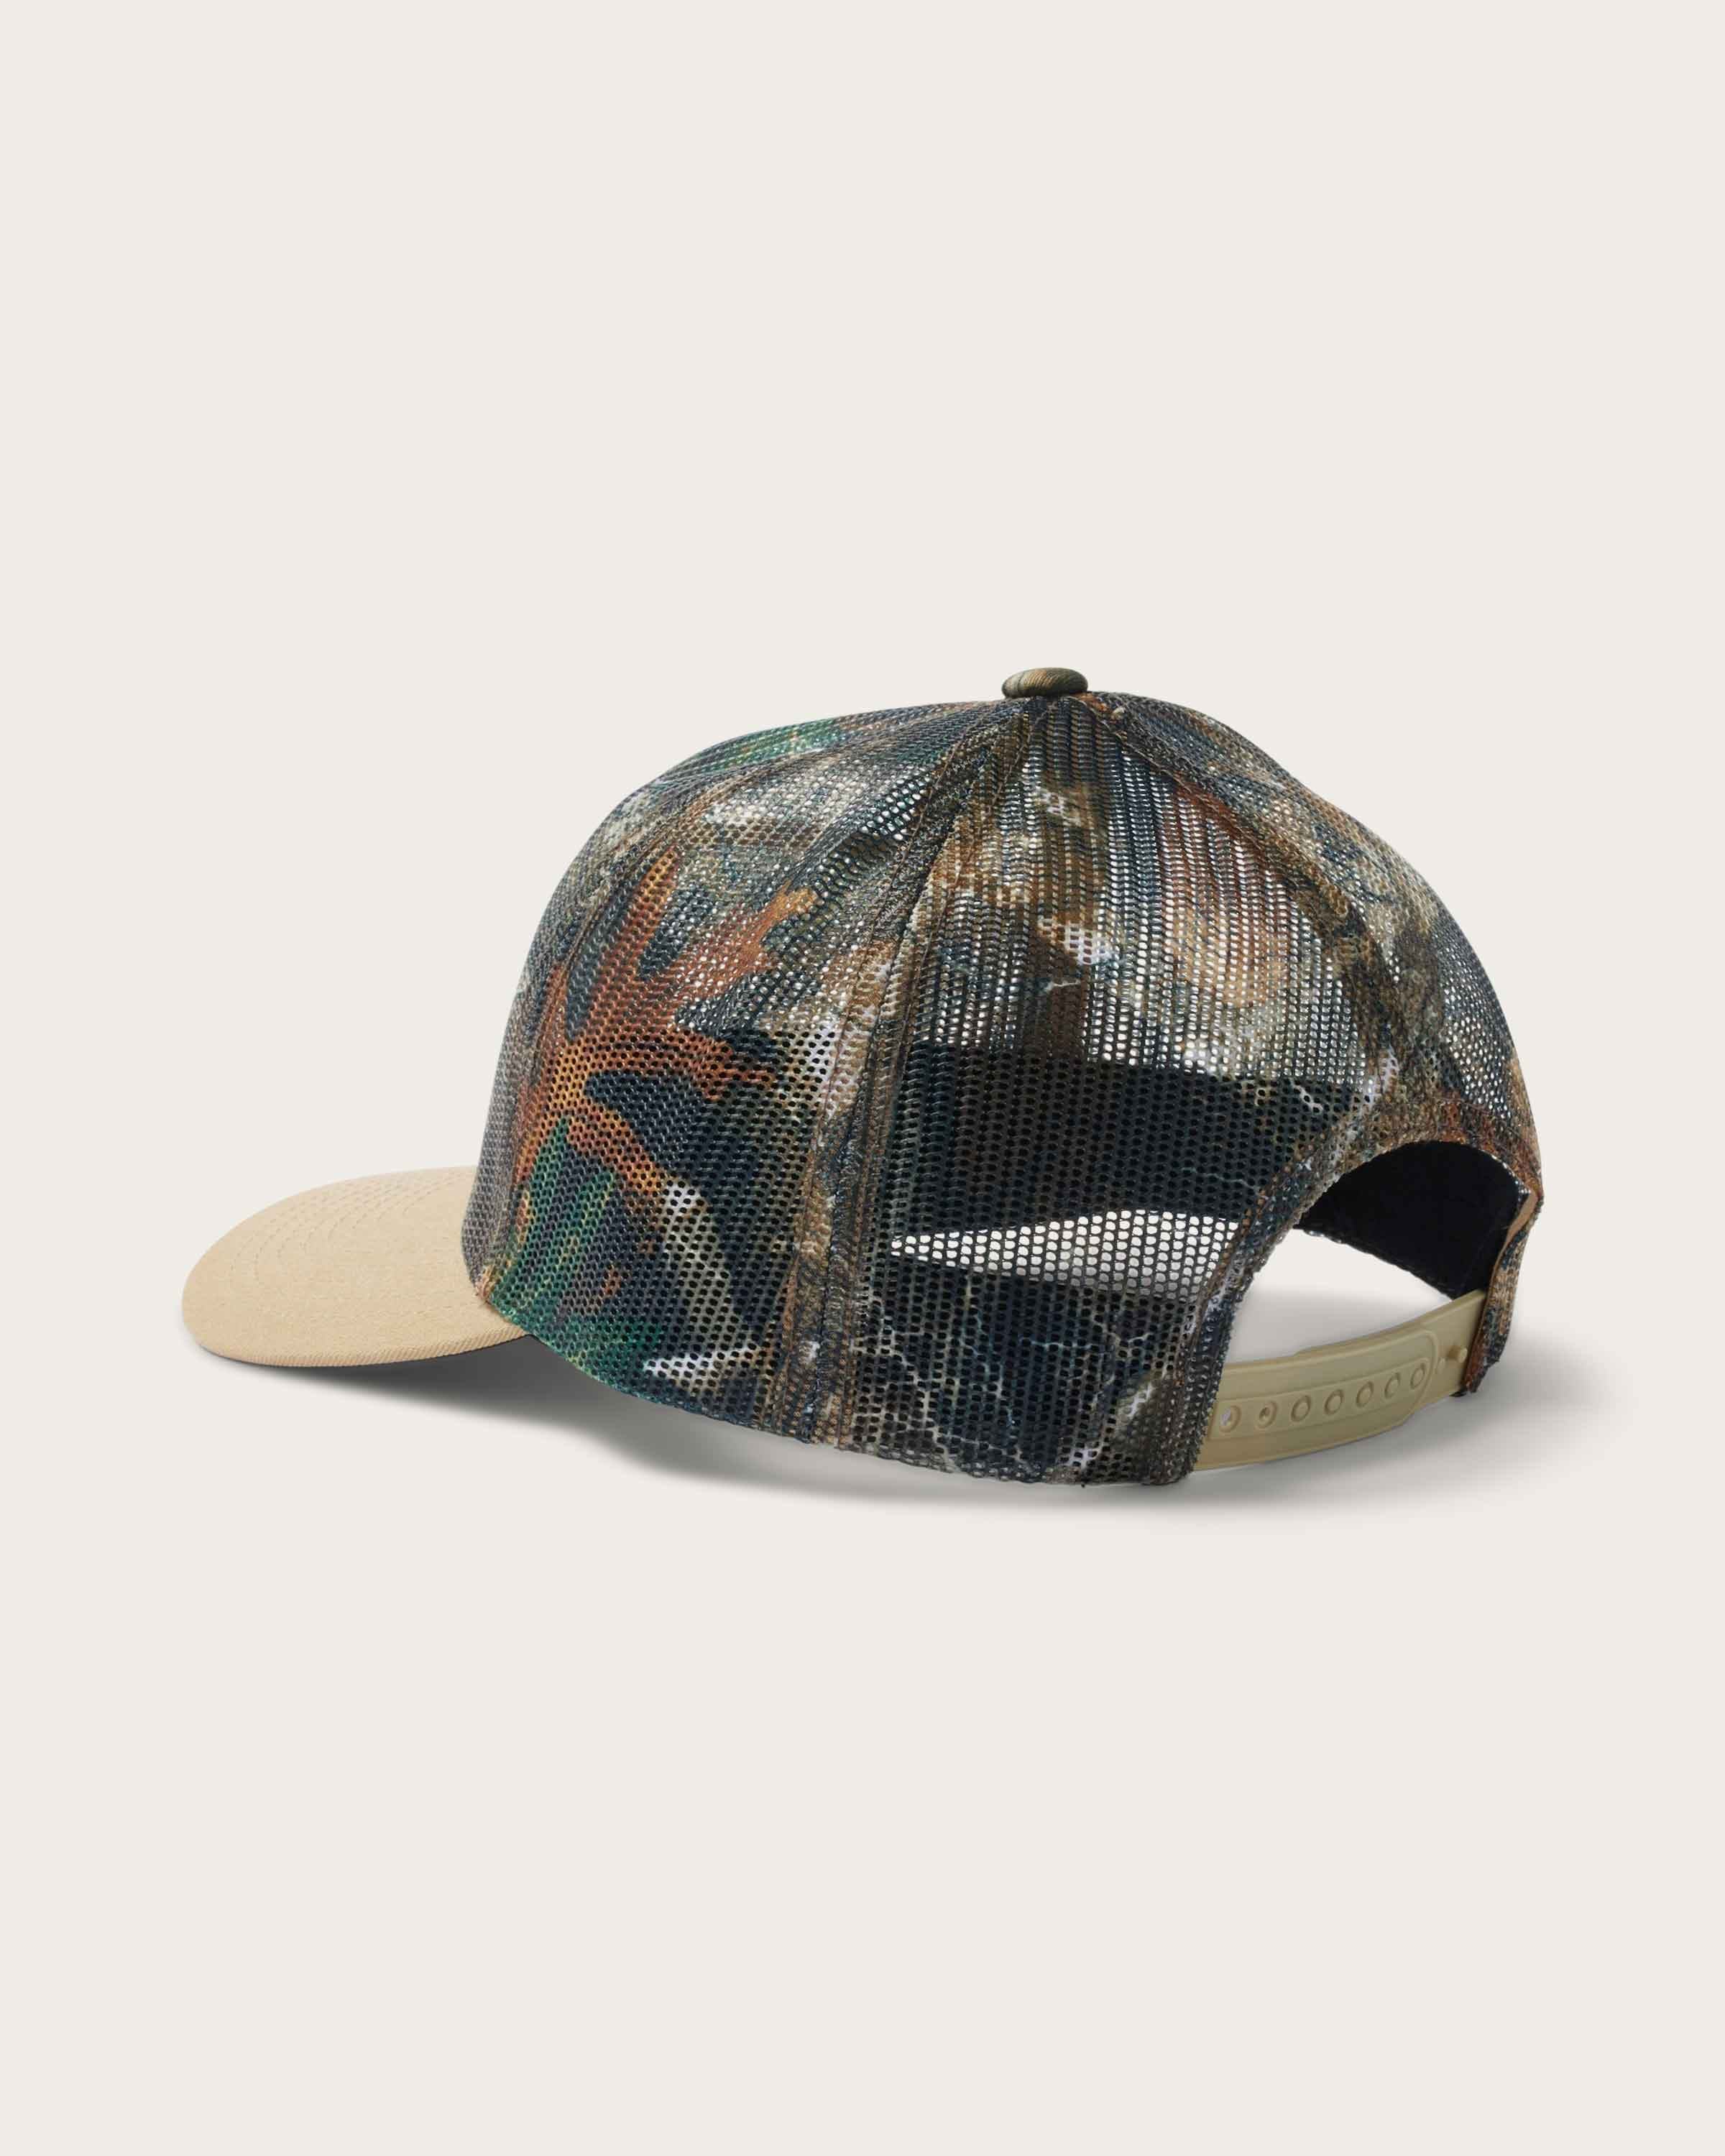 Raghorn Mesh Hat - Realtree® Camo - undefined - Hemlock Hat Co. Ball Caps